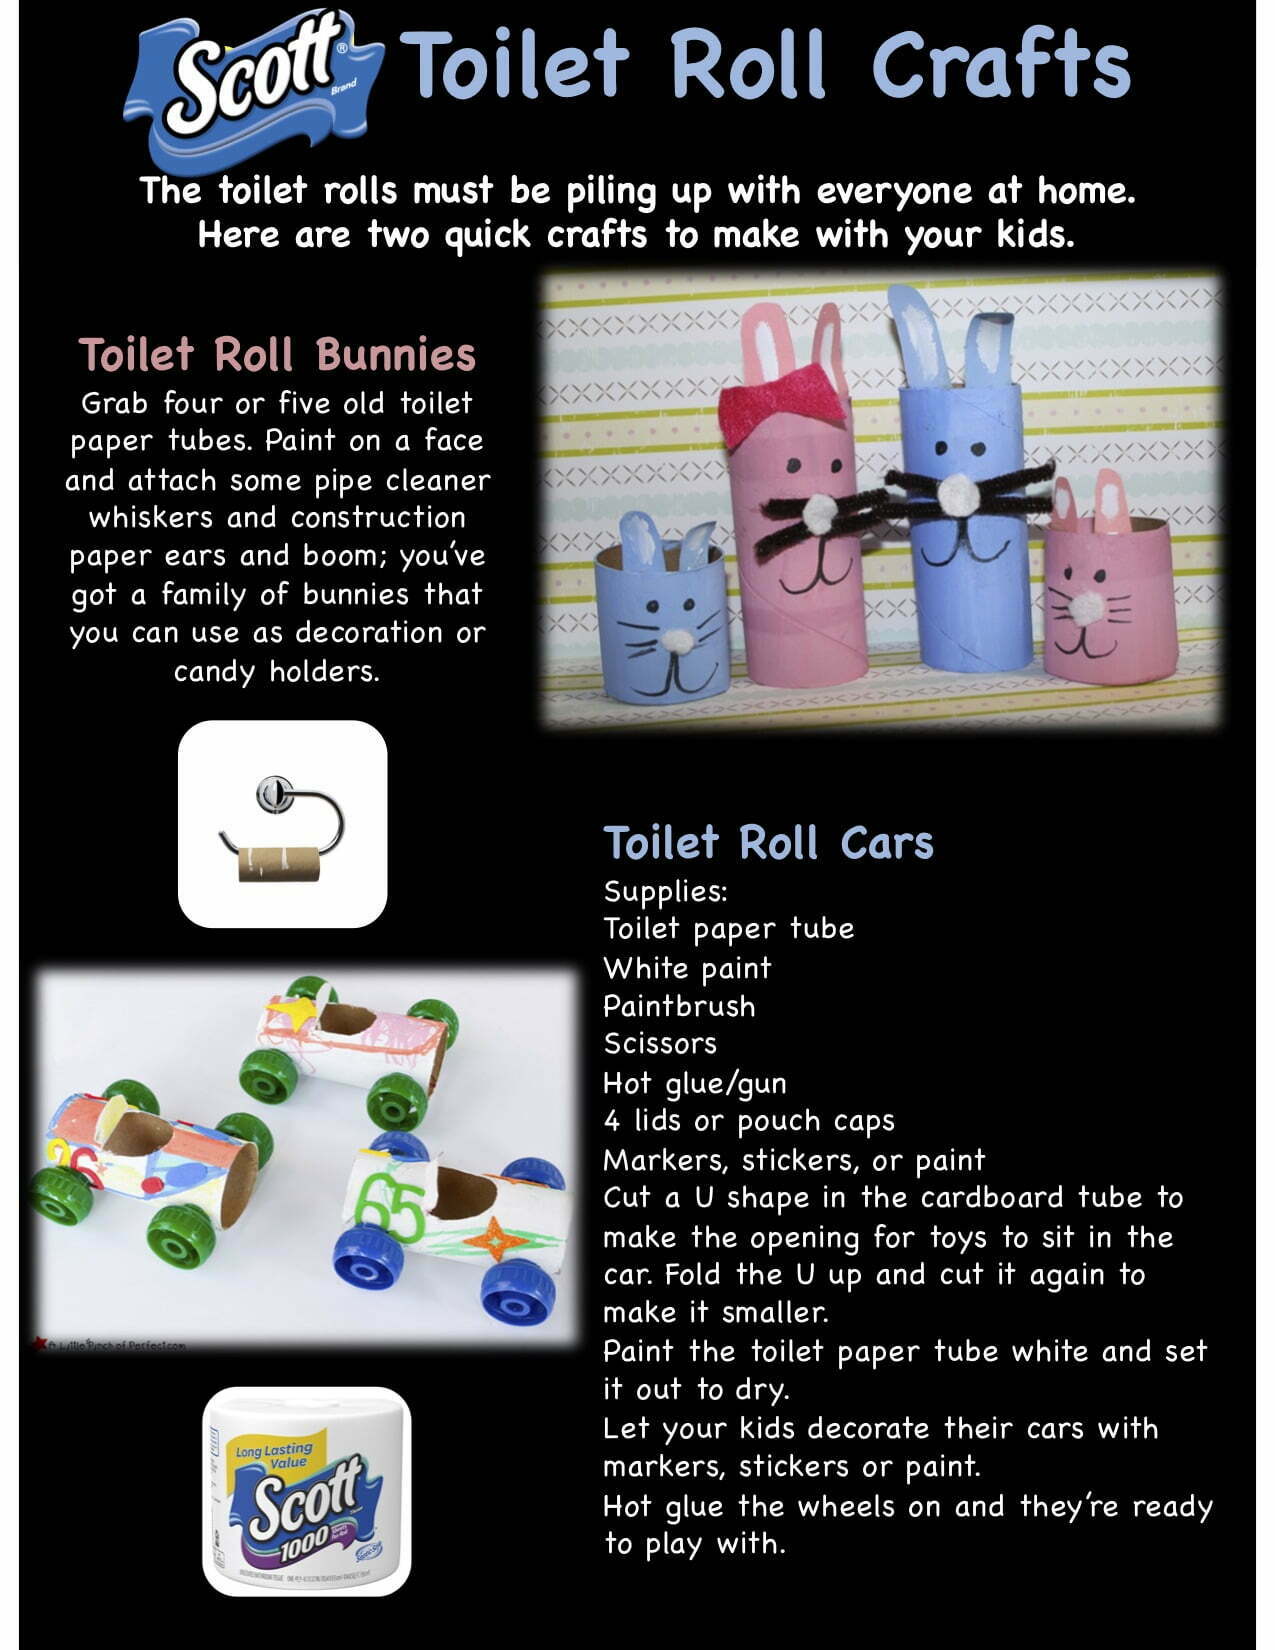 Scott Toilet Roll Crafts copy